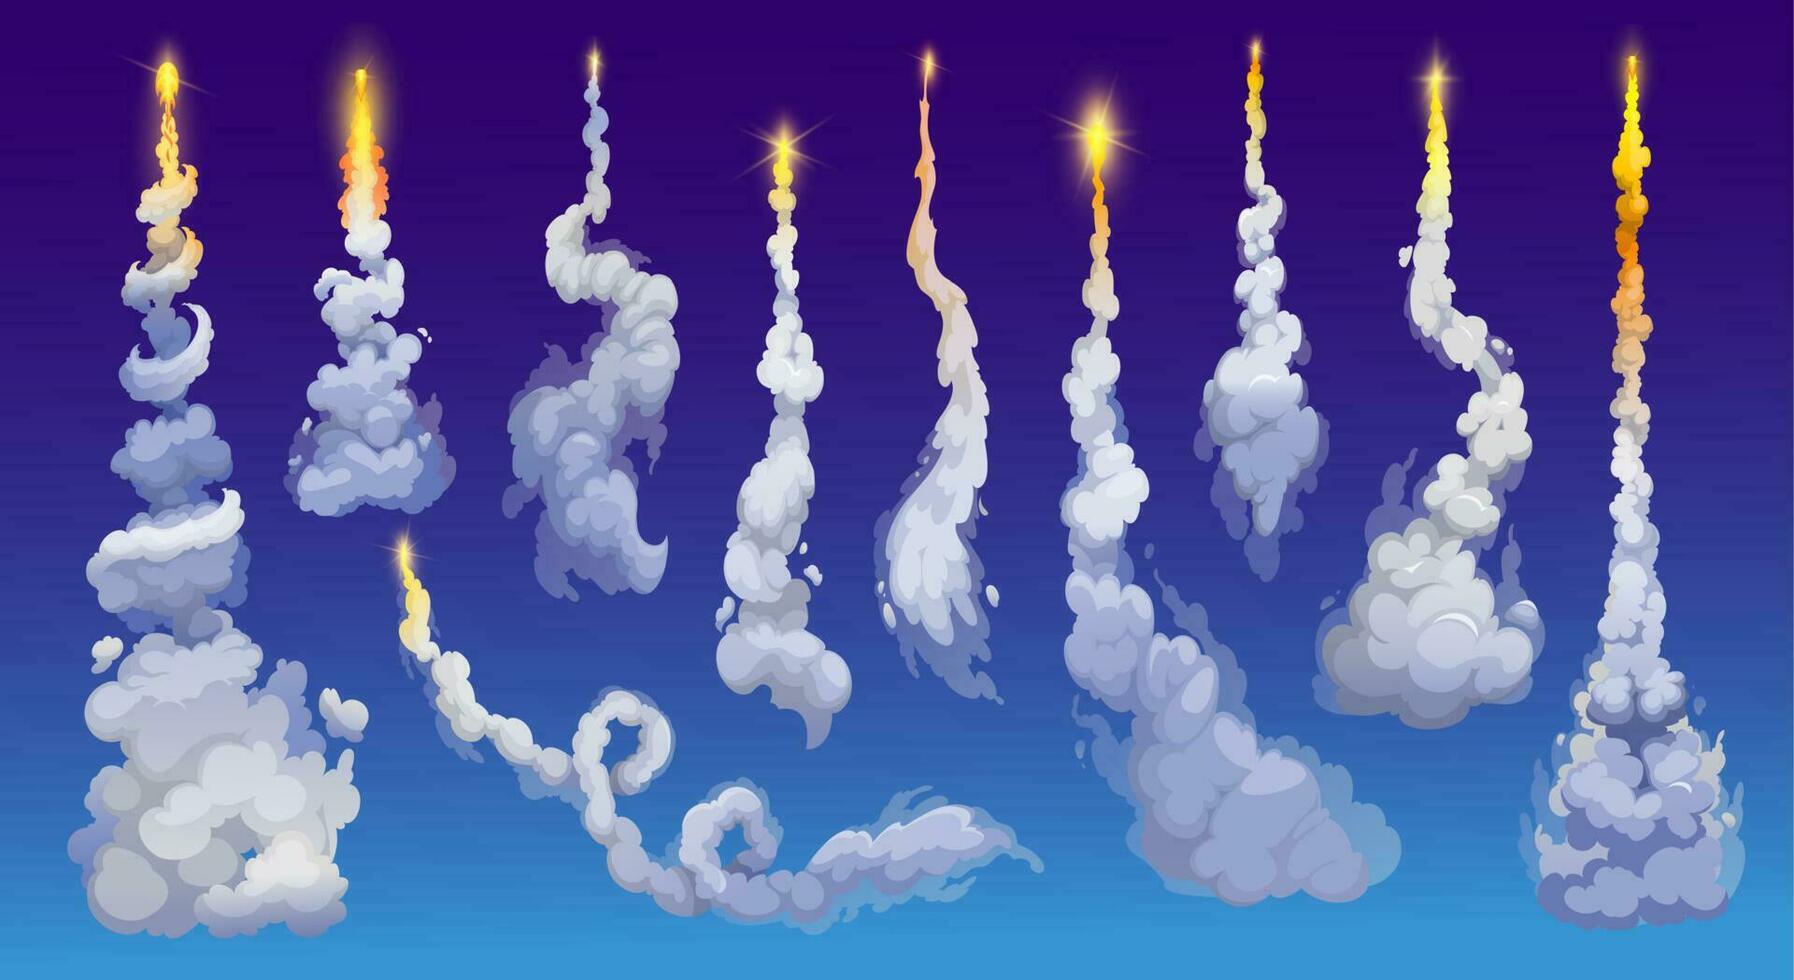 Cartoon rocket smoke trails, spaceship fire tails vector